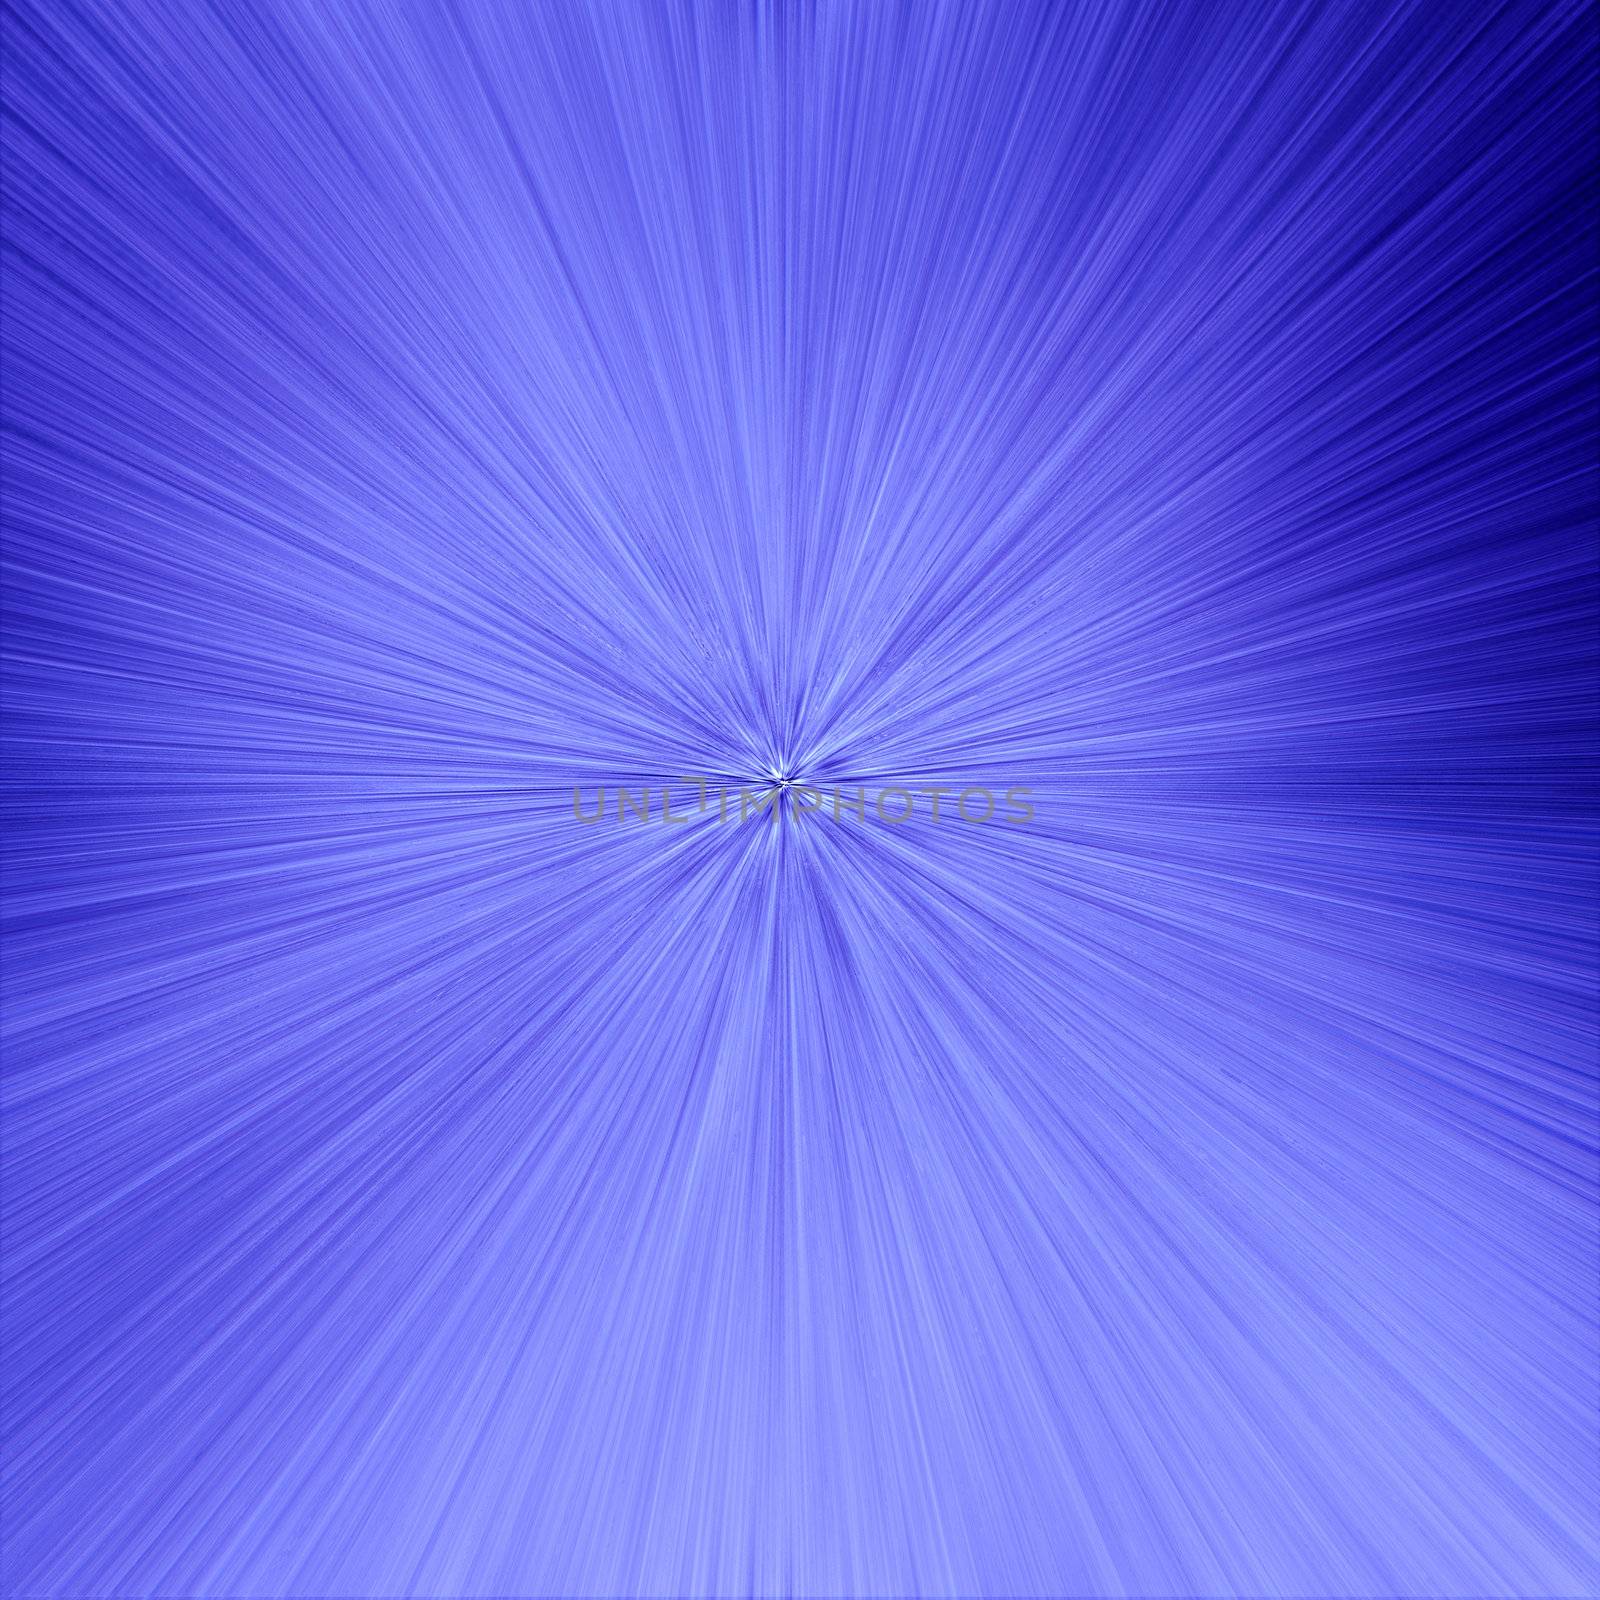 Blue straight lines converging by Wavebreakmedia